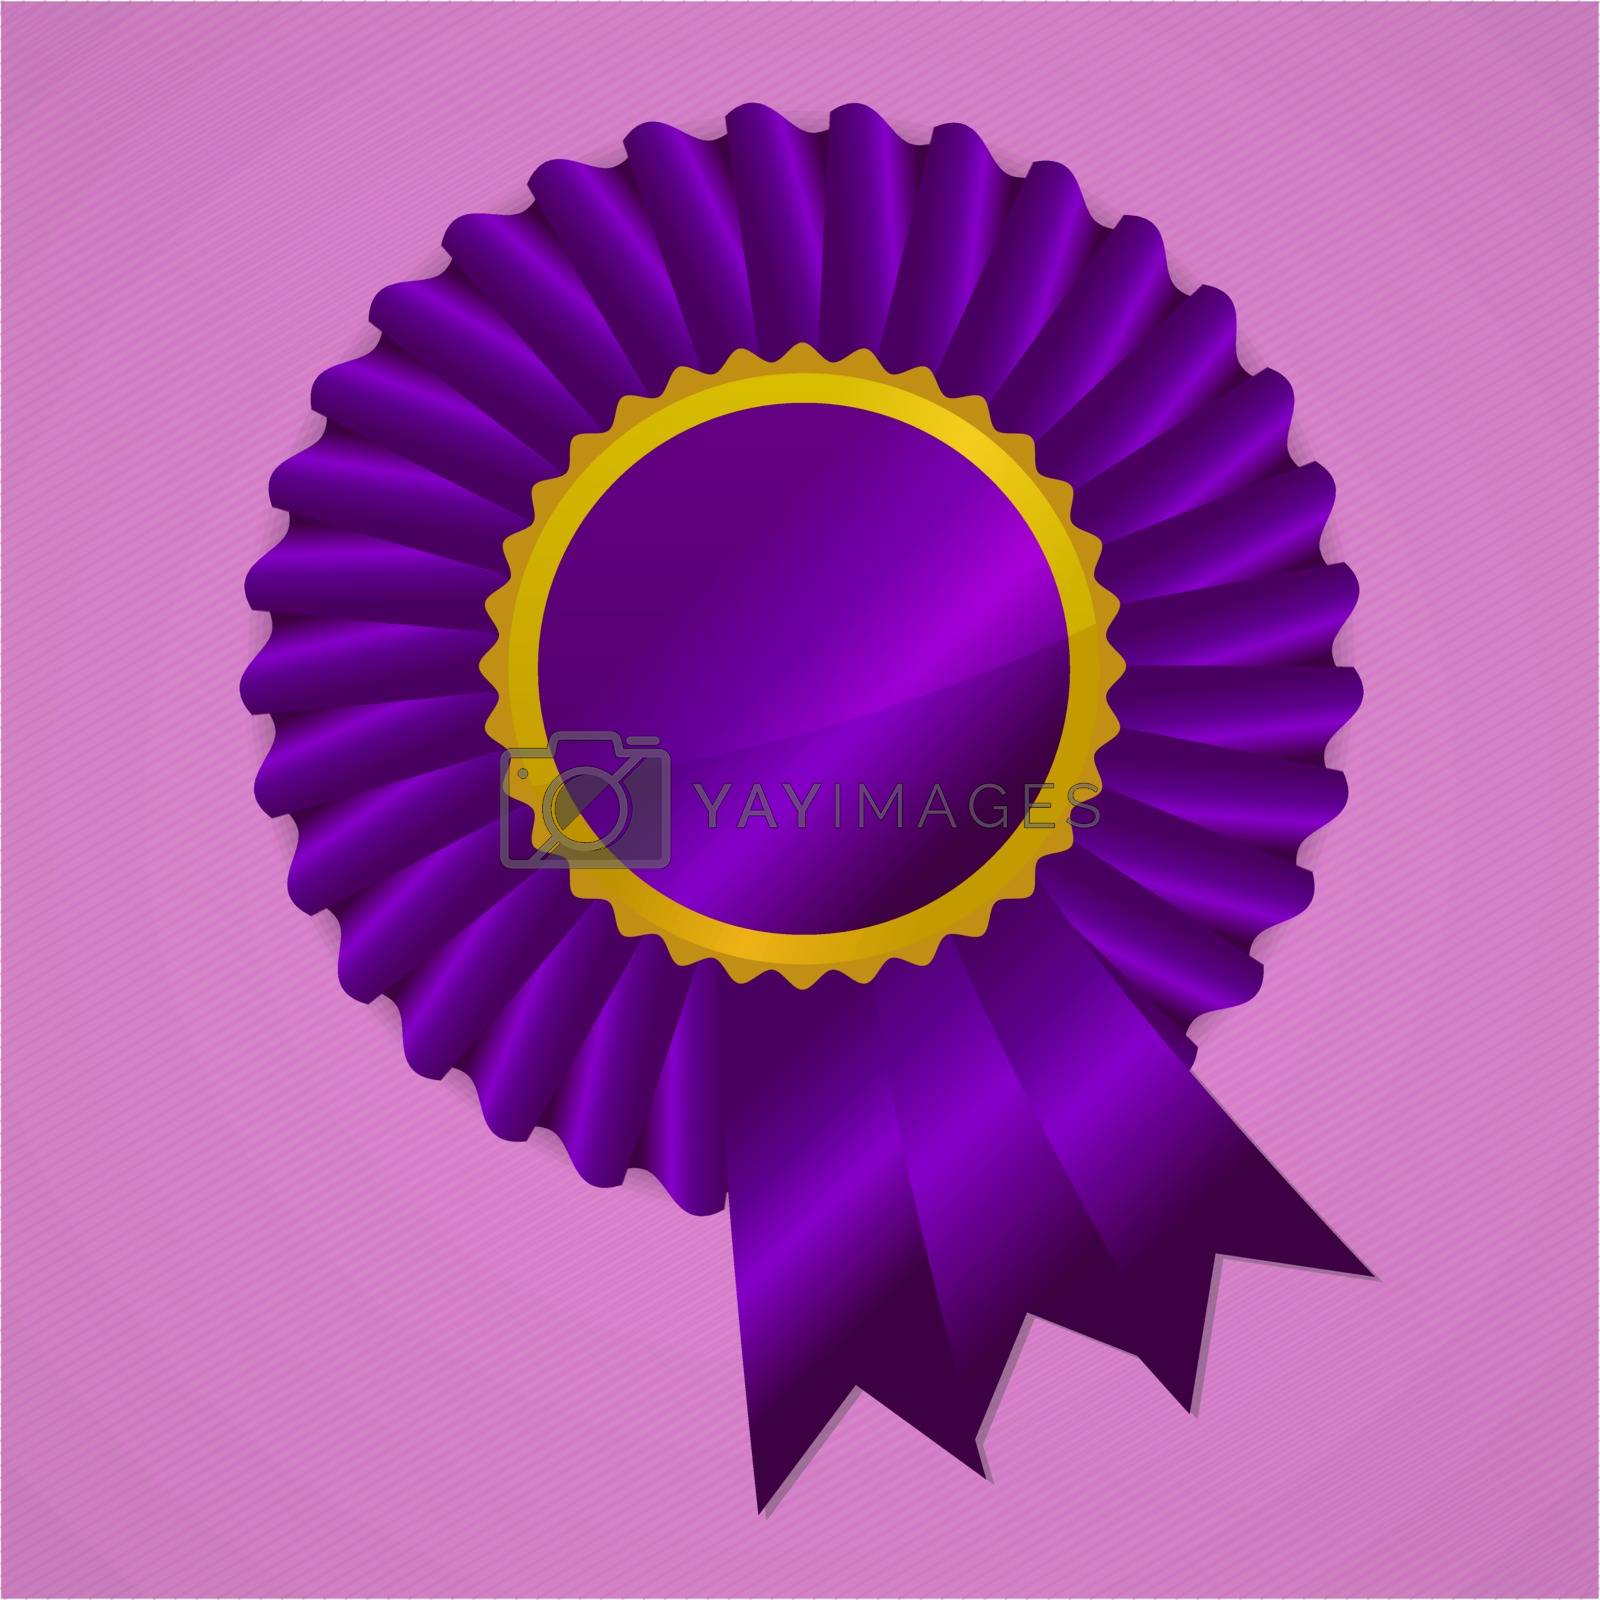 Royalty free image of Violet award ribbon rosette on pink background by punsayaporn